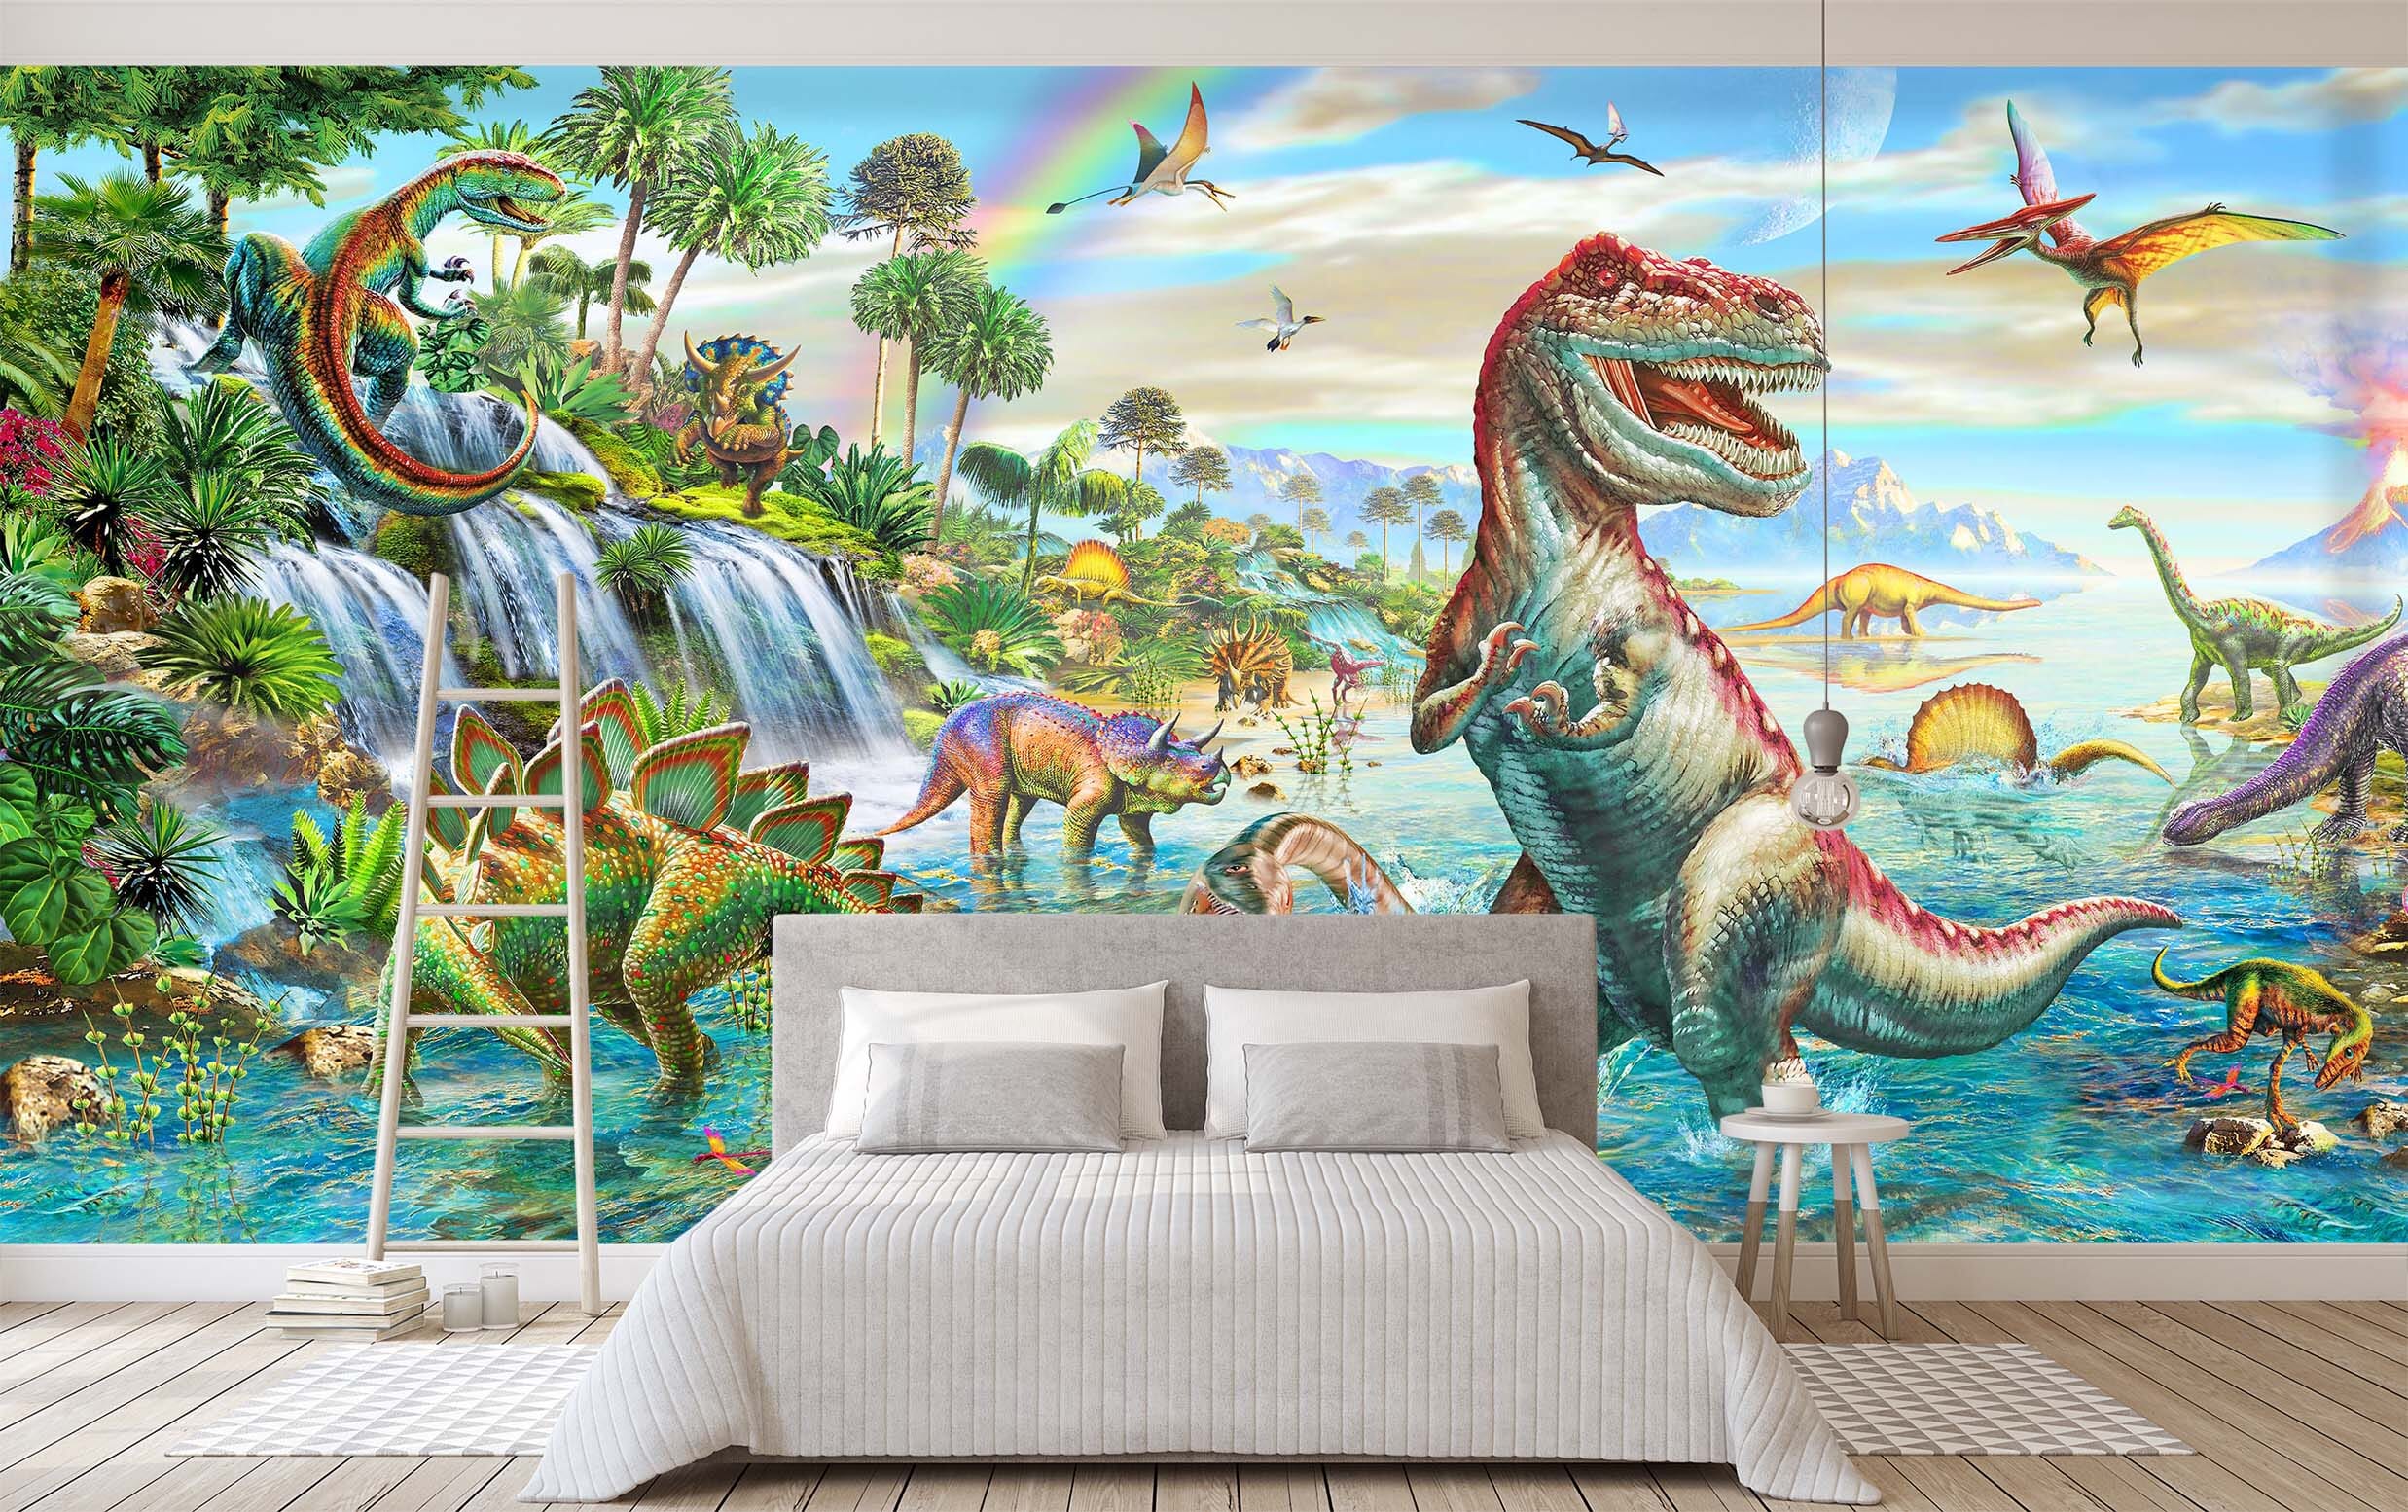 3D Dinosaur Canyon 1418 Adrian Chesterman Wall Mural Wall Murals Wallpaper AJ Wallpaper 2 